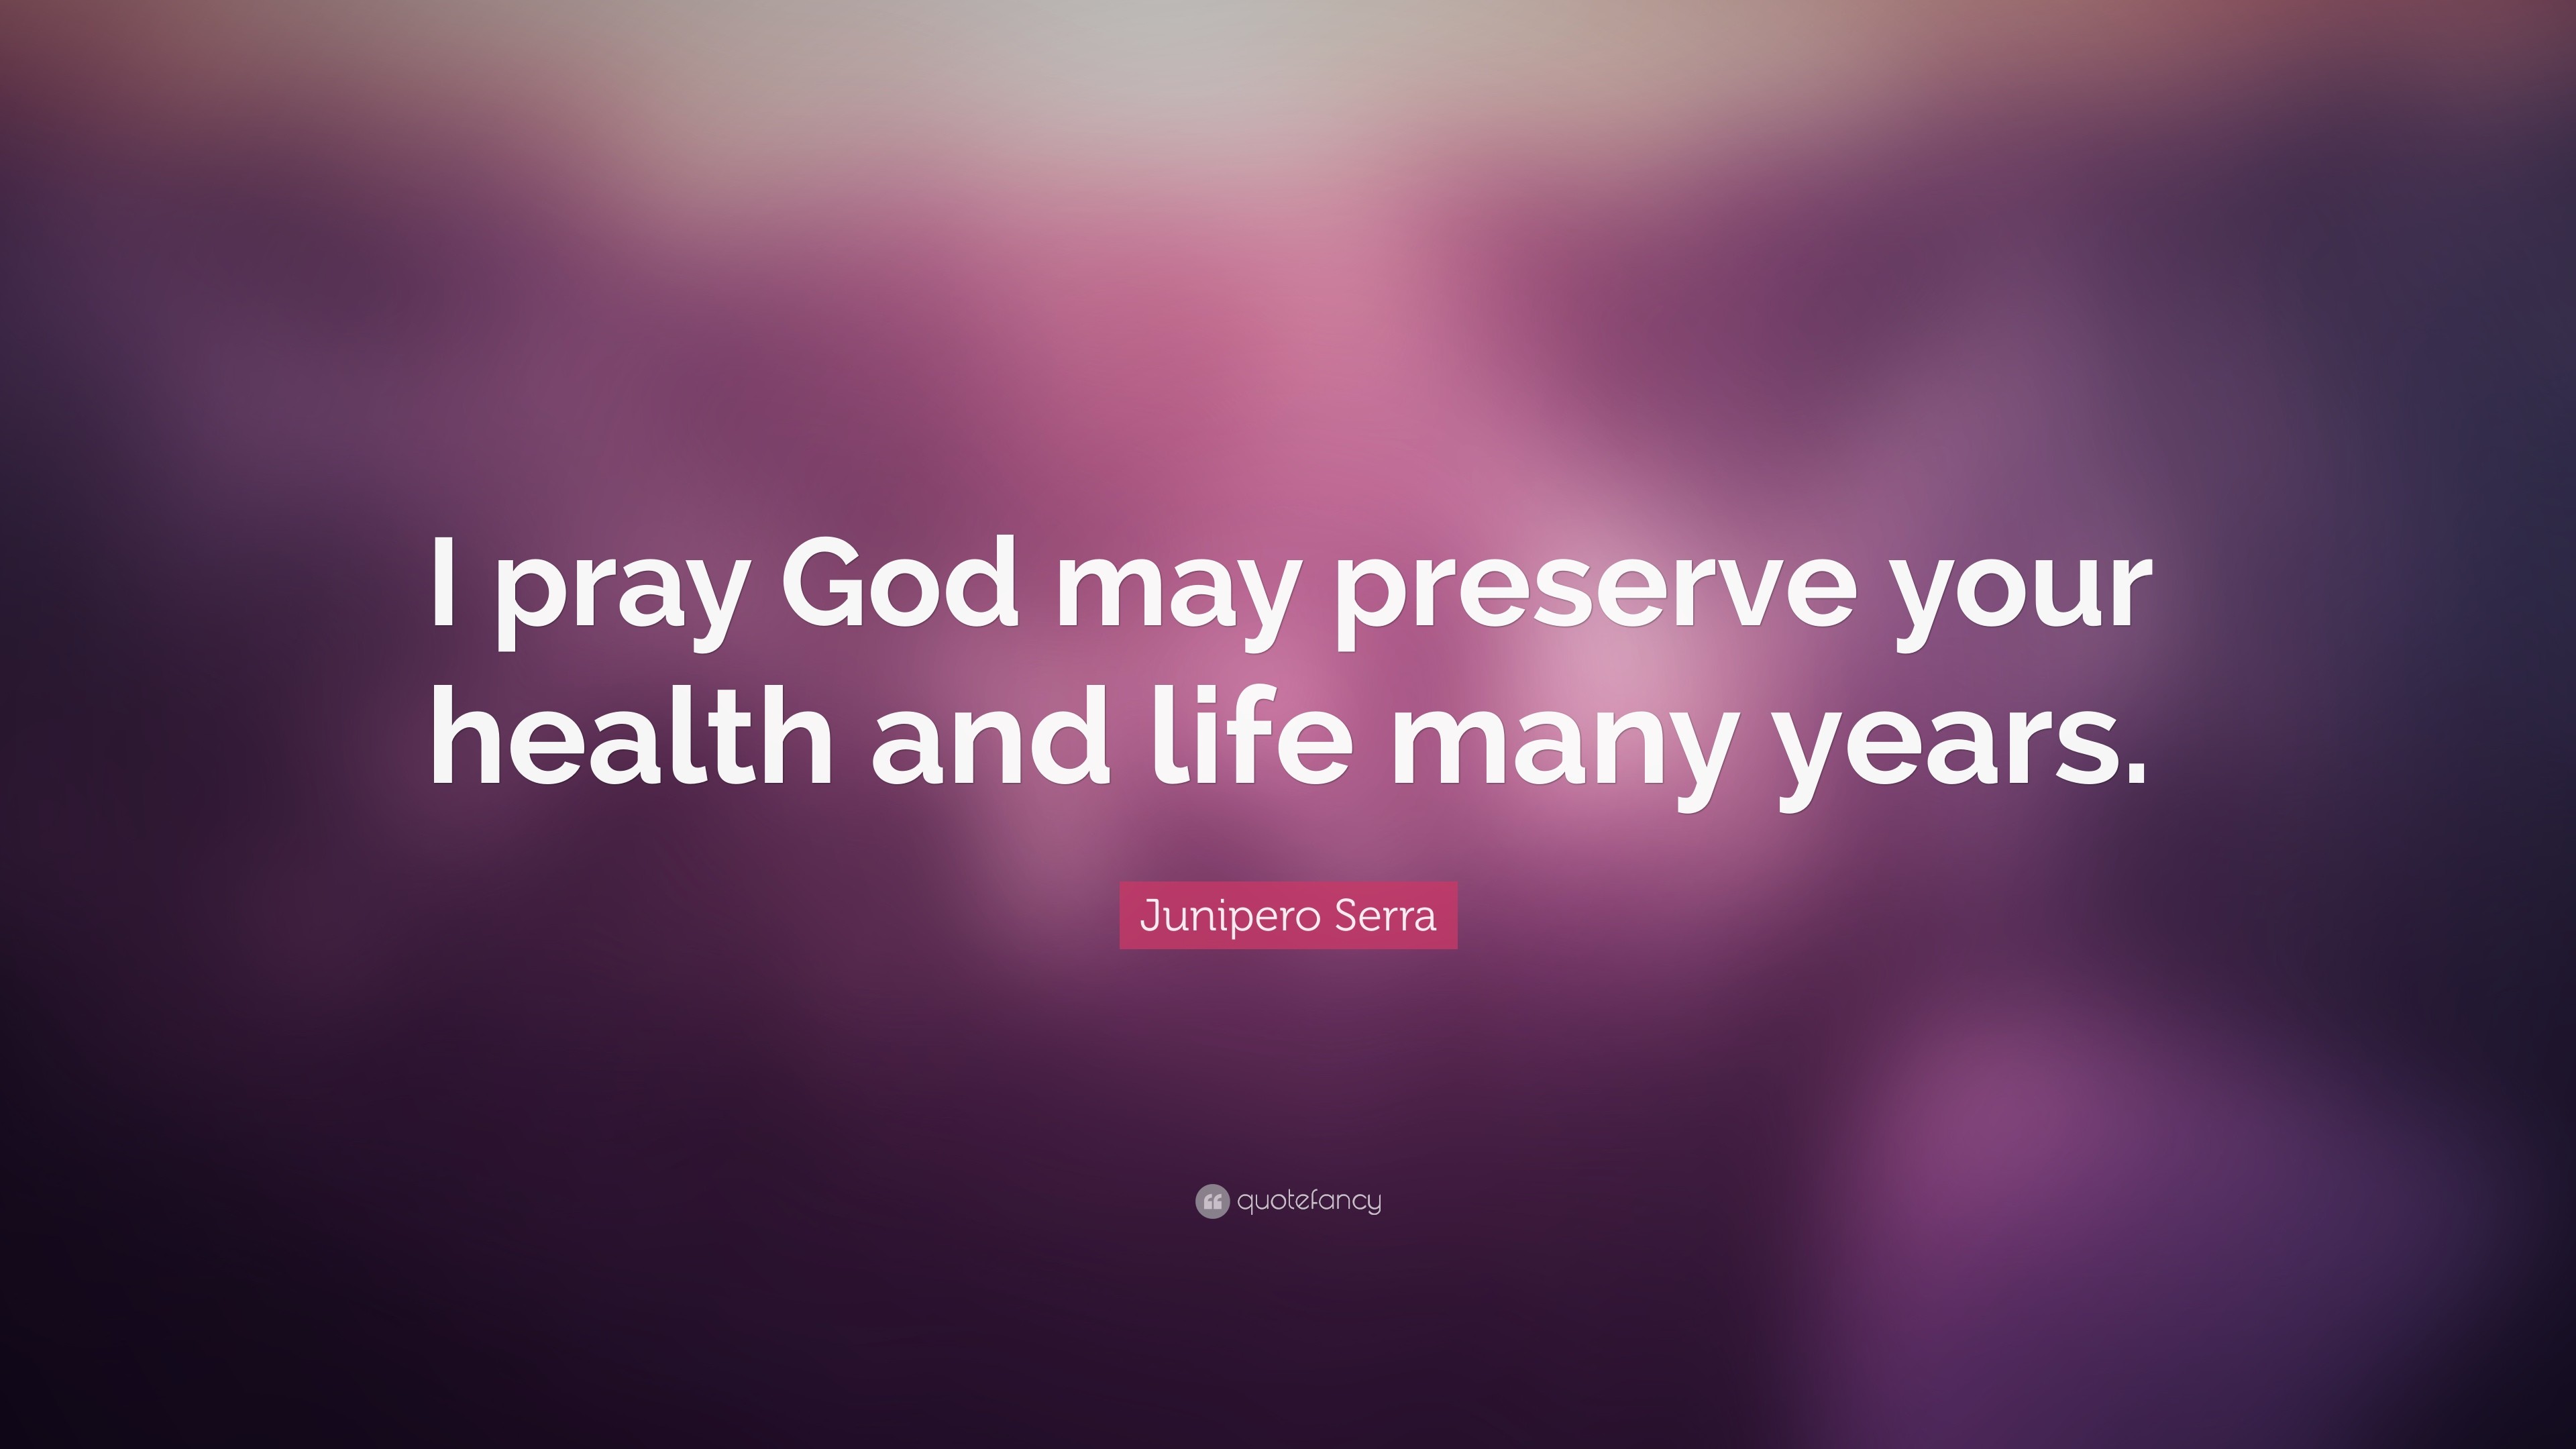 3840x2160 Junipero Serra Quote: “I pray God may preserve your health and life many  years